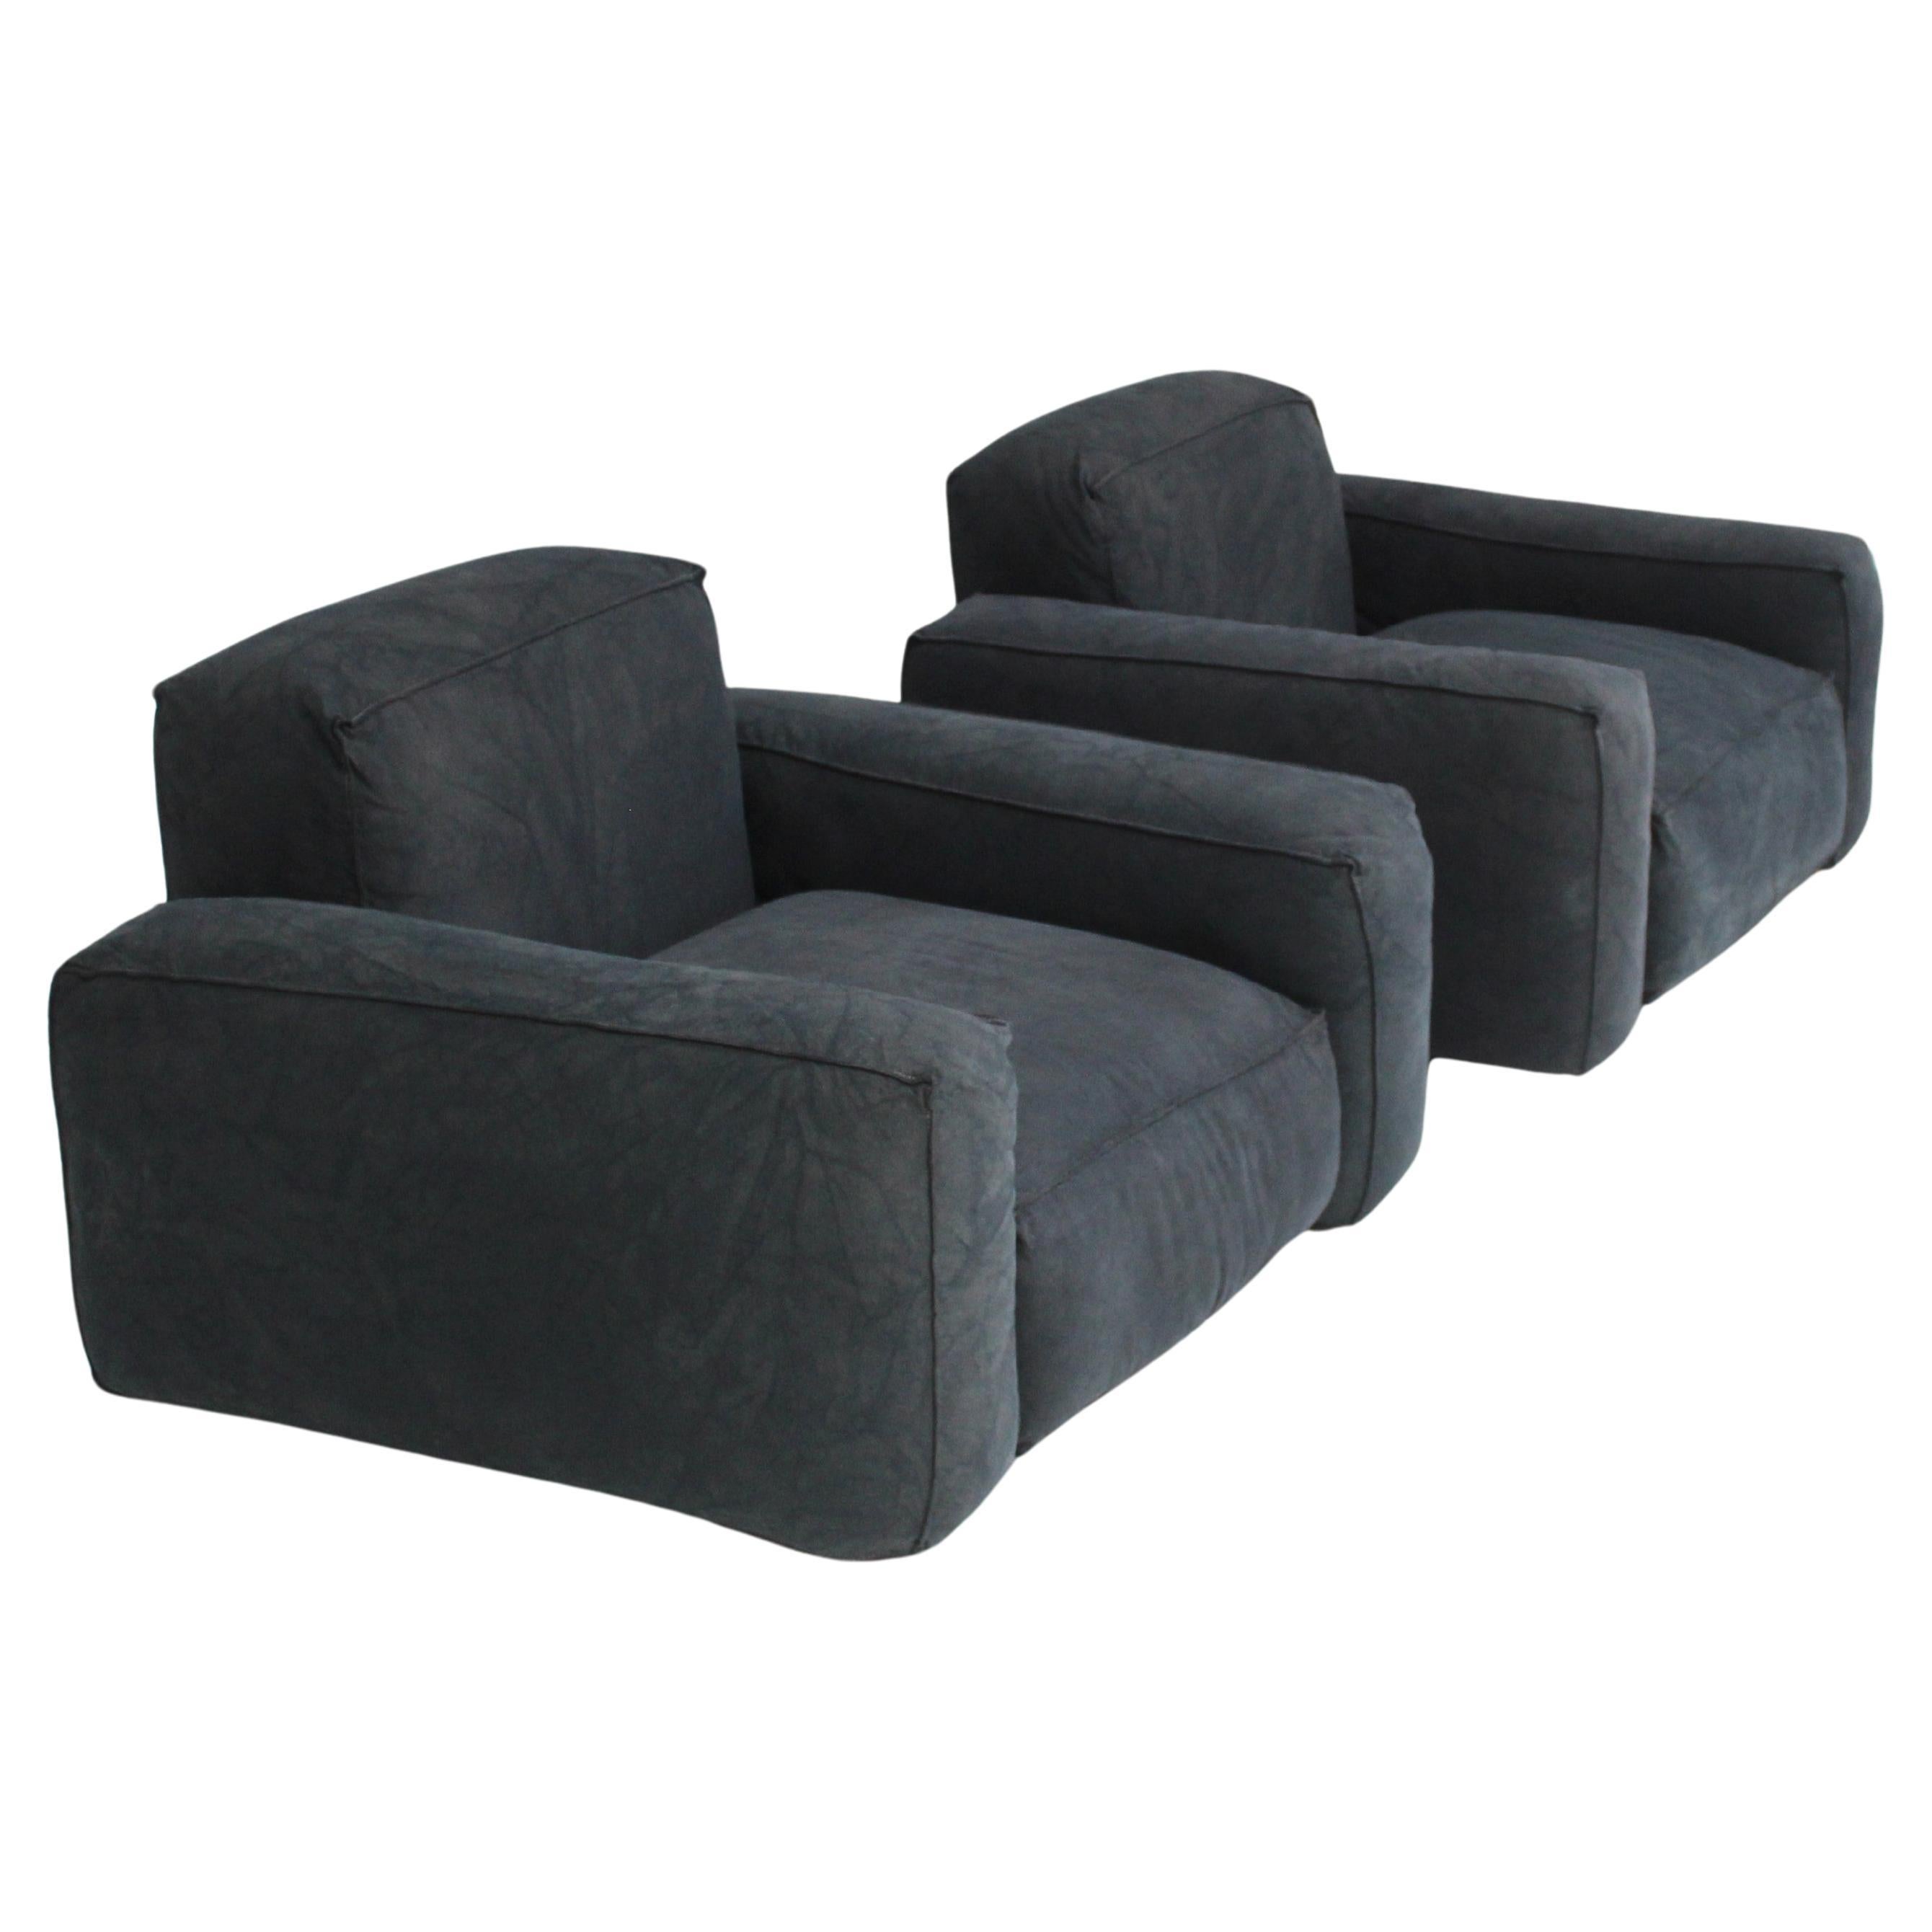 Marechiaro sofa set by Mario Marenco for Arflex For Sale